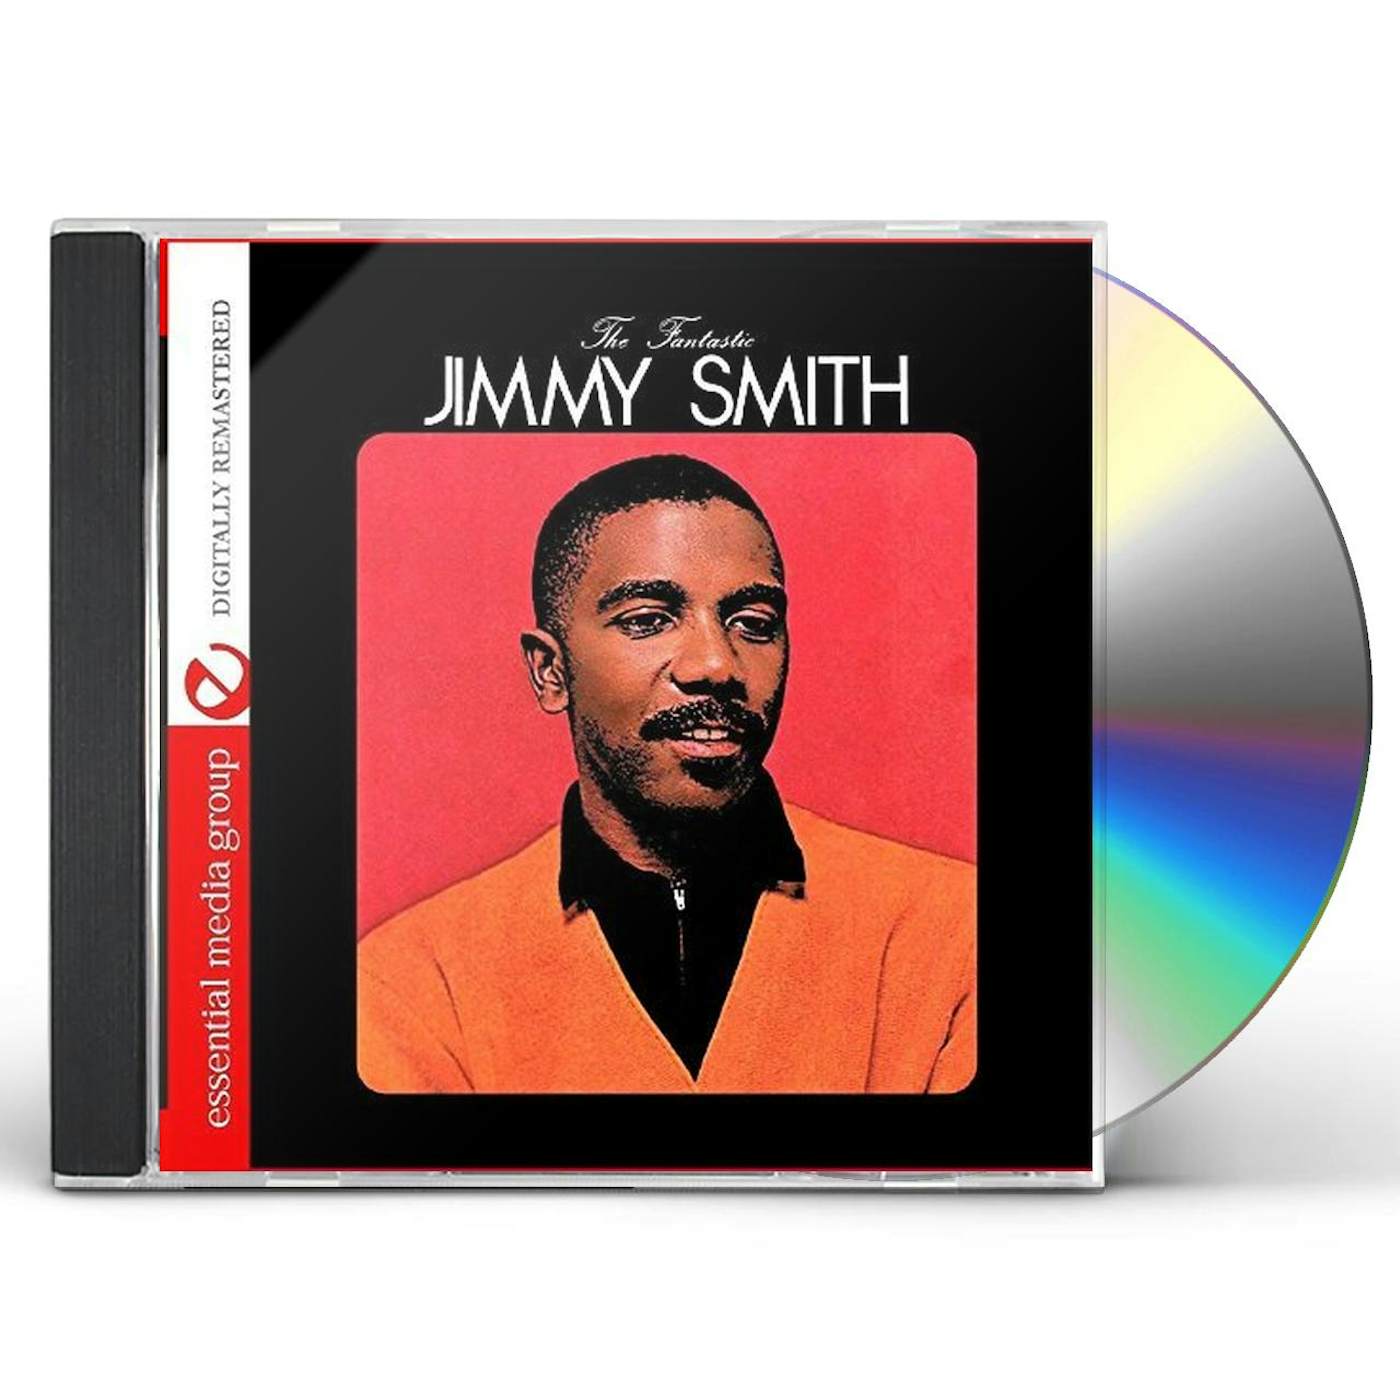 FANTASTIC JIMMY SMITH CD